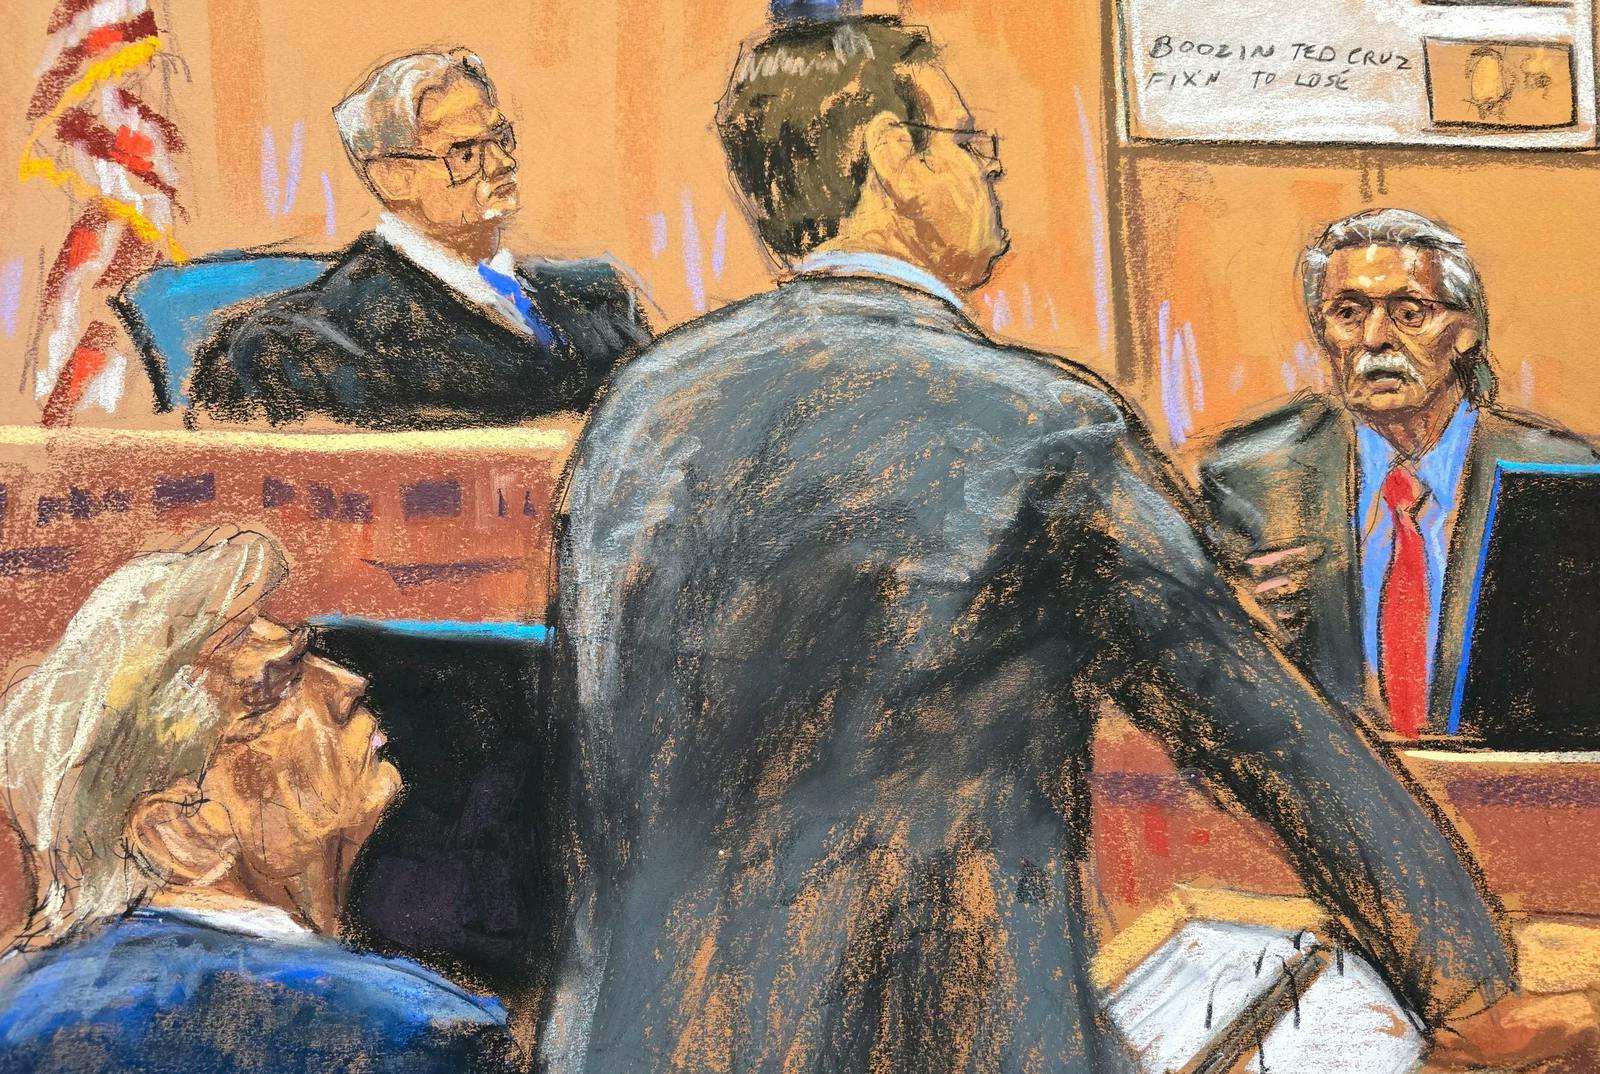 A sketch of Trump at his hush money trial